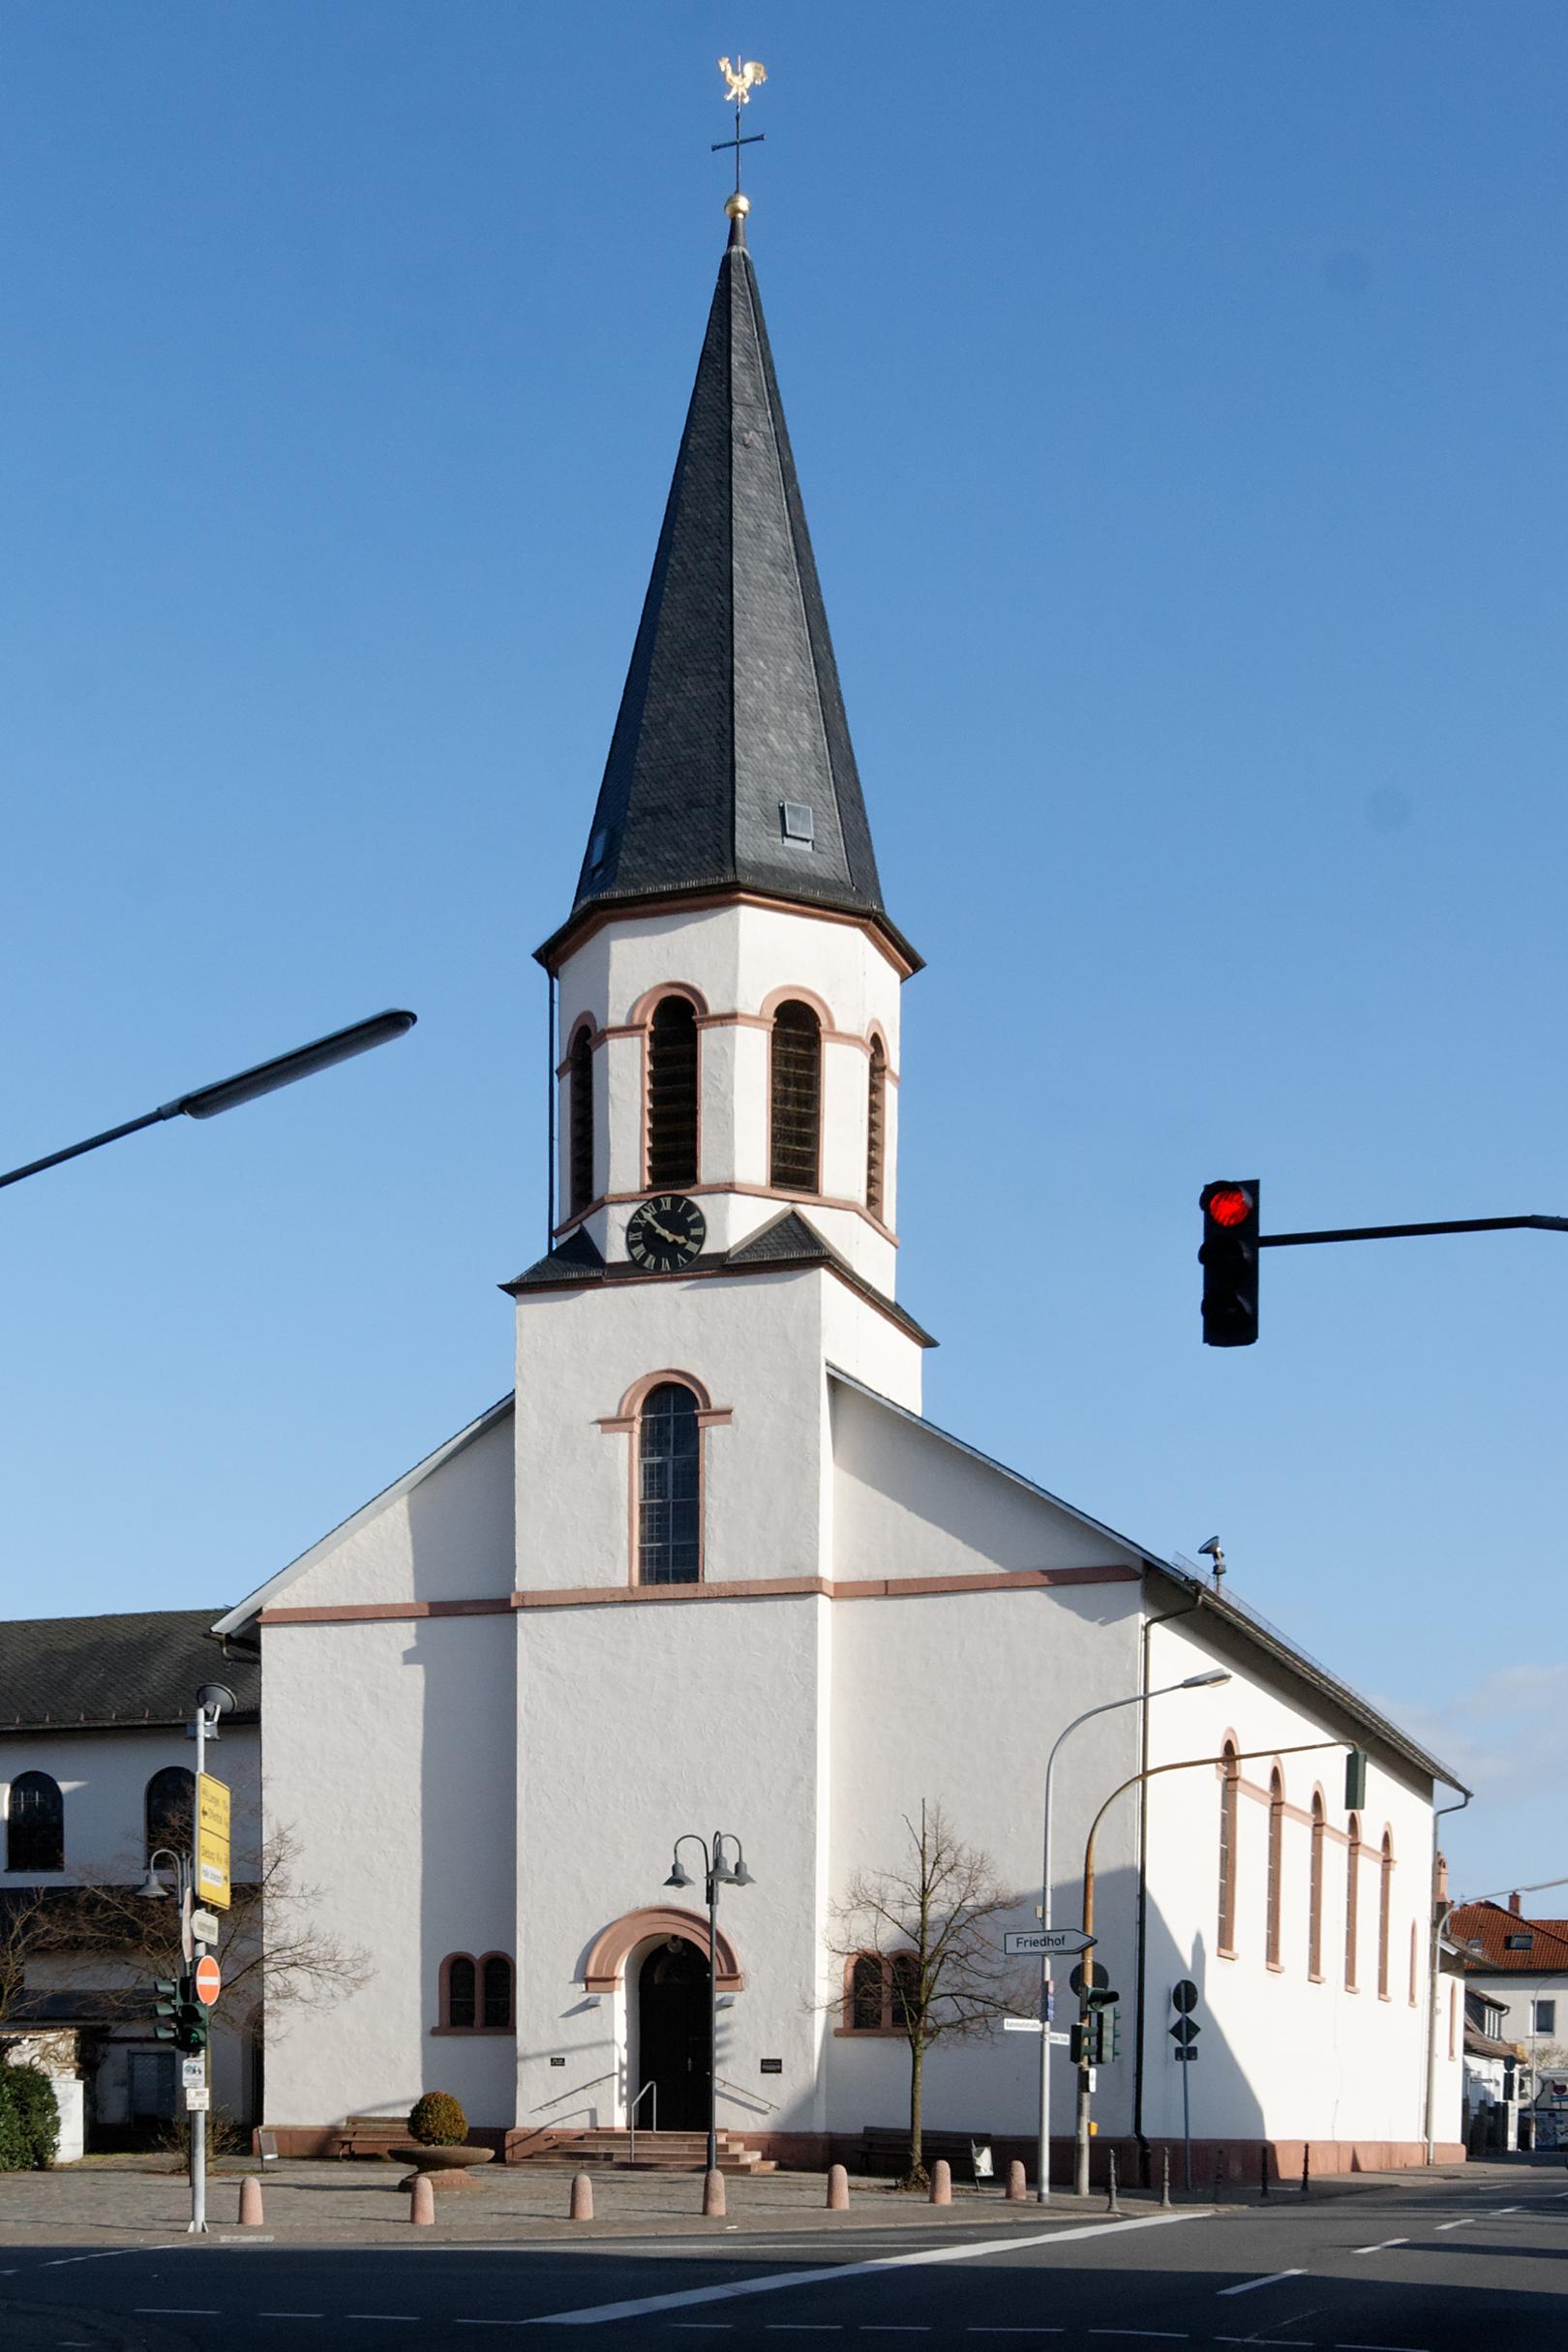 Urberach Kirche St. Gallus (c) Von E-W - Eigenes Werk, CC BY-SA 3.0, https://commons.wikimedia.org/w/index.php?curid=14501104